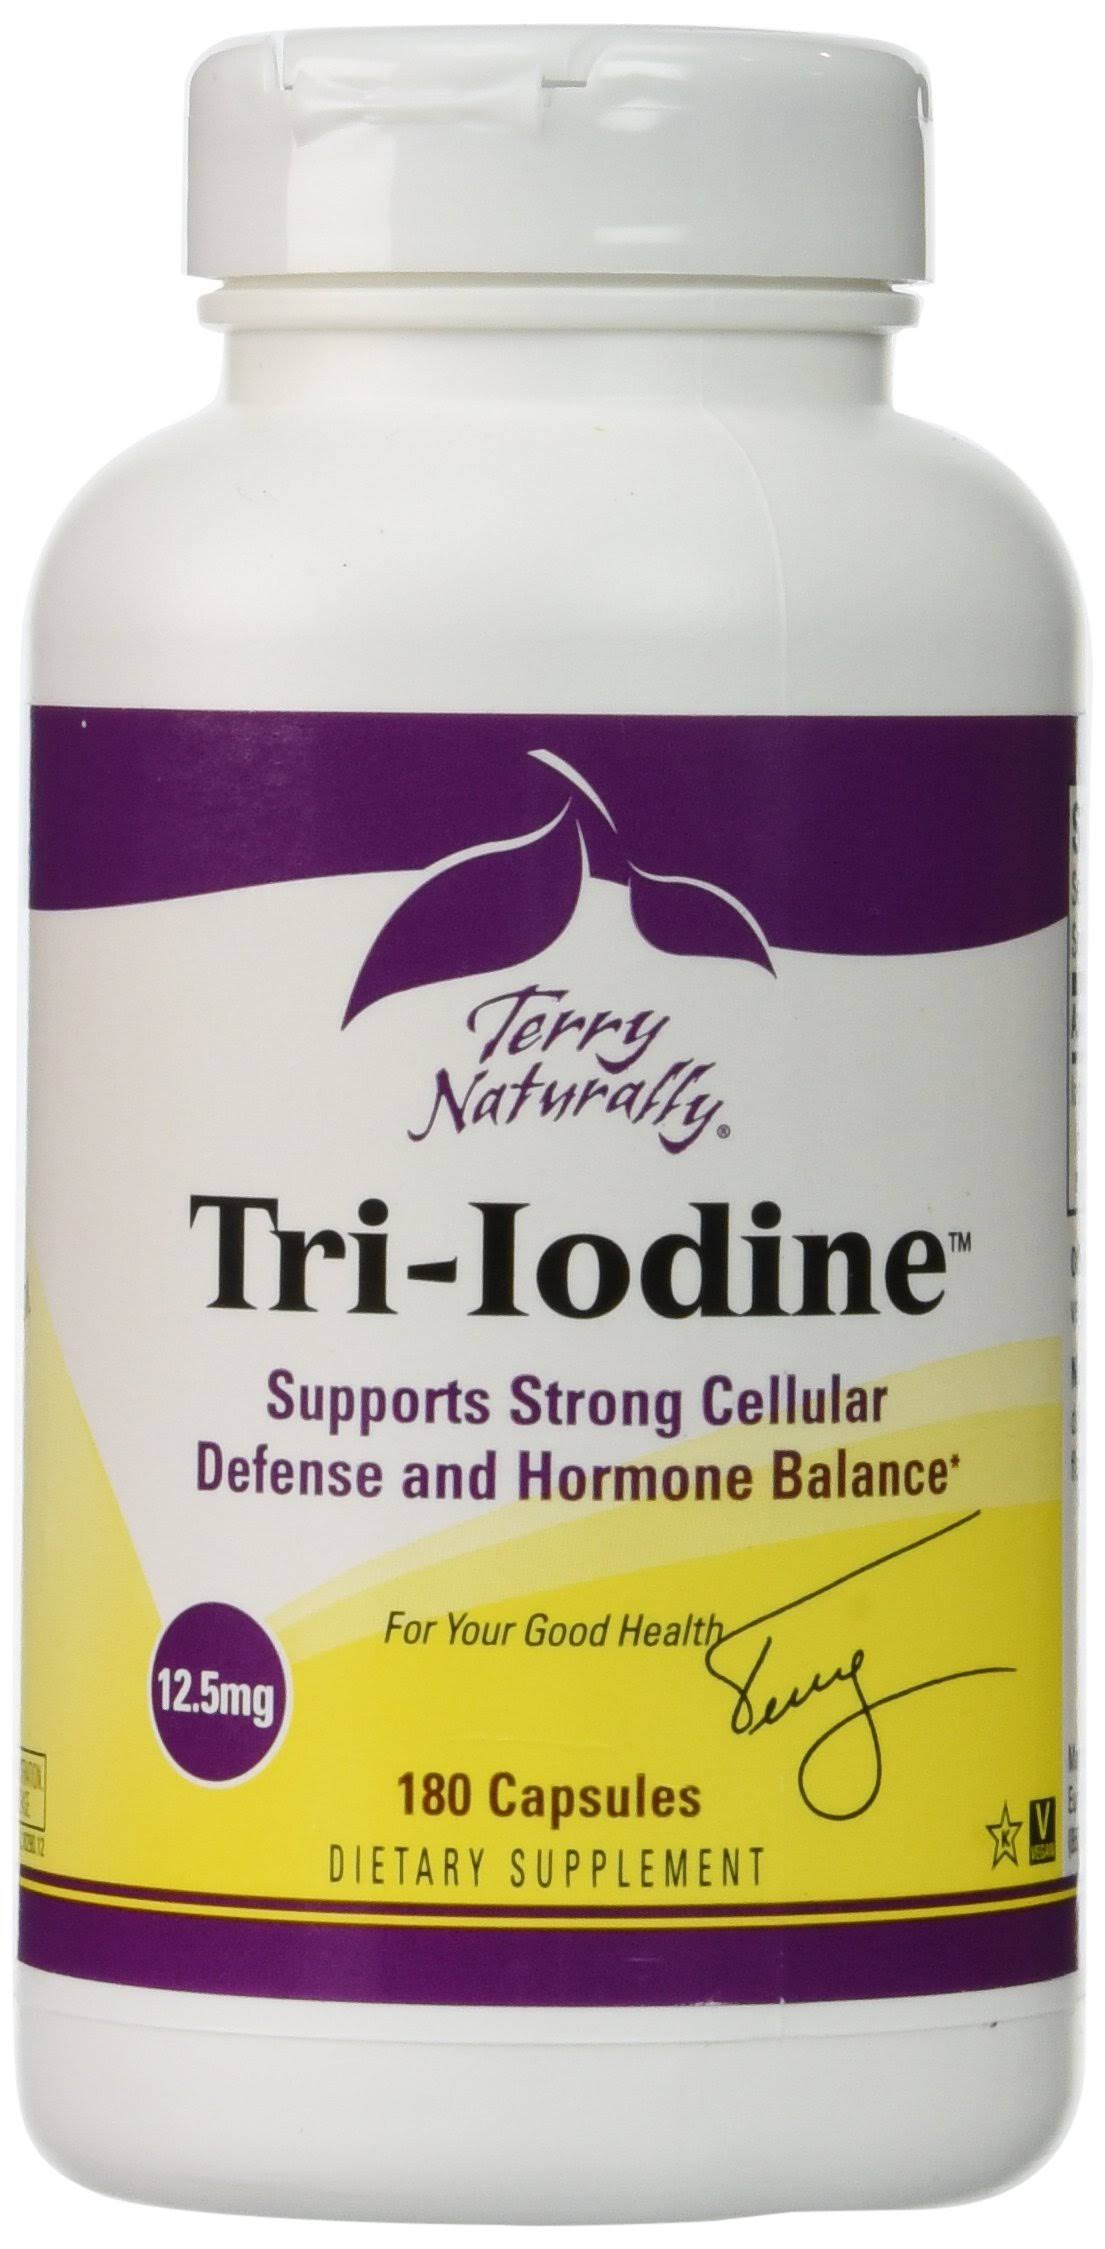 Terry Naturally Tri-Iodine Supplement - 180 Capsules